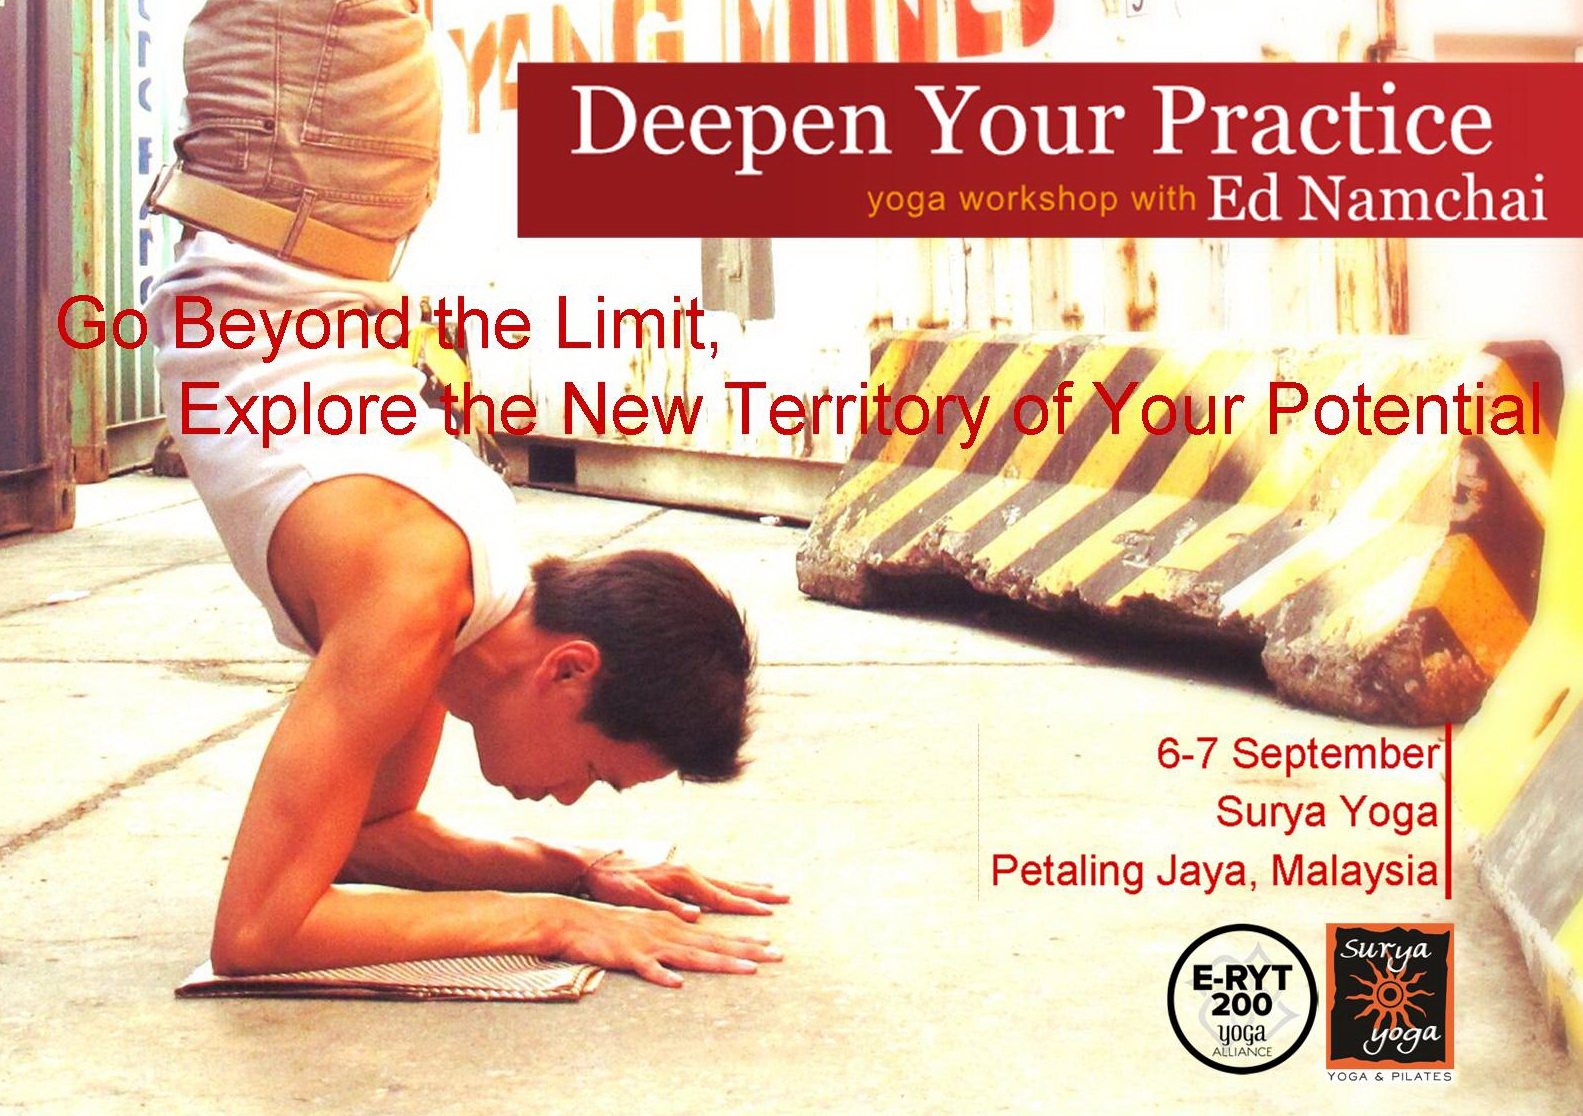 Deepen Your Practice Yoga Workshop with Ed Namchai in Petaling Jaya, Malaysia